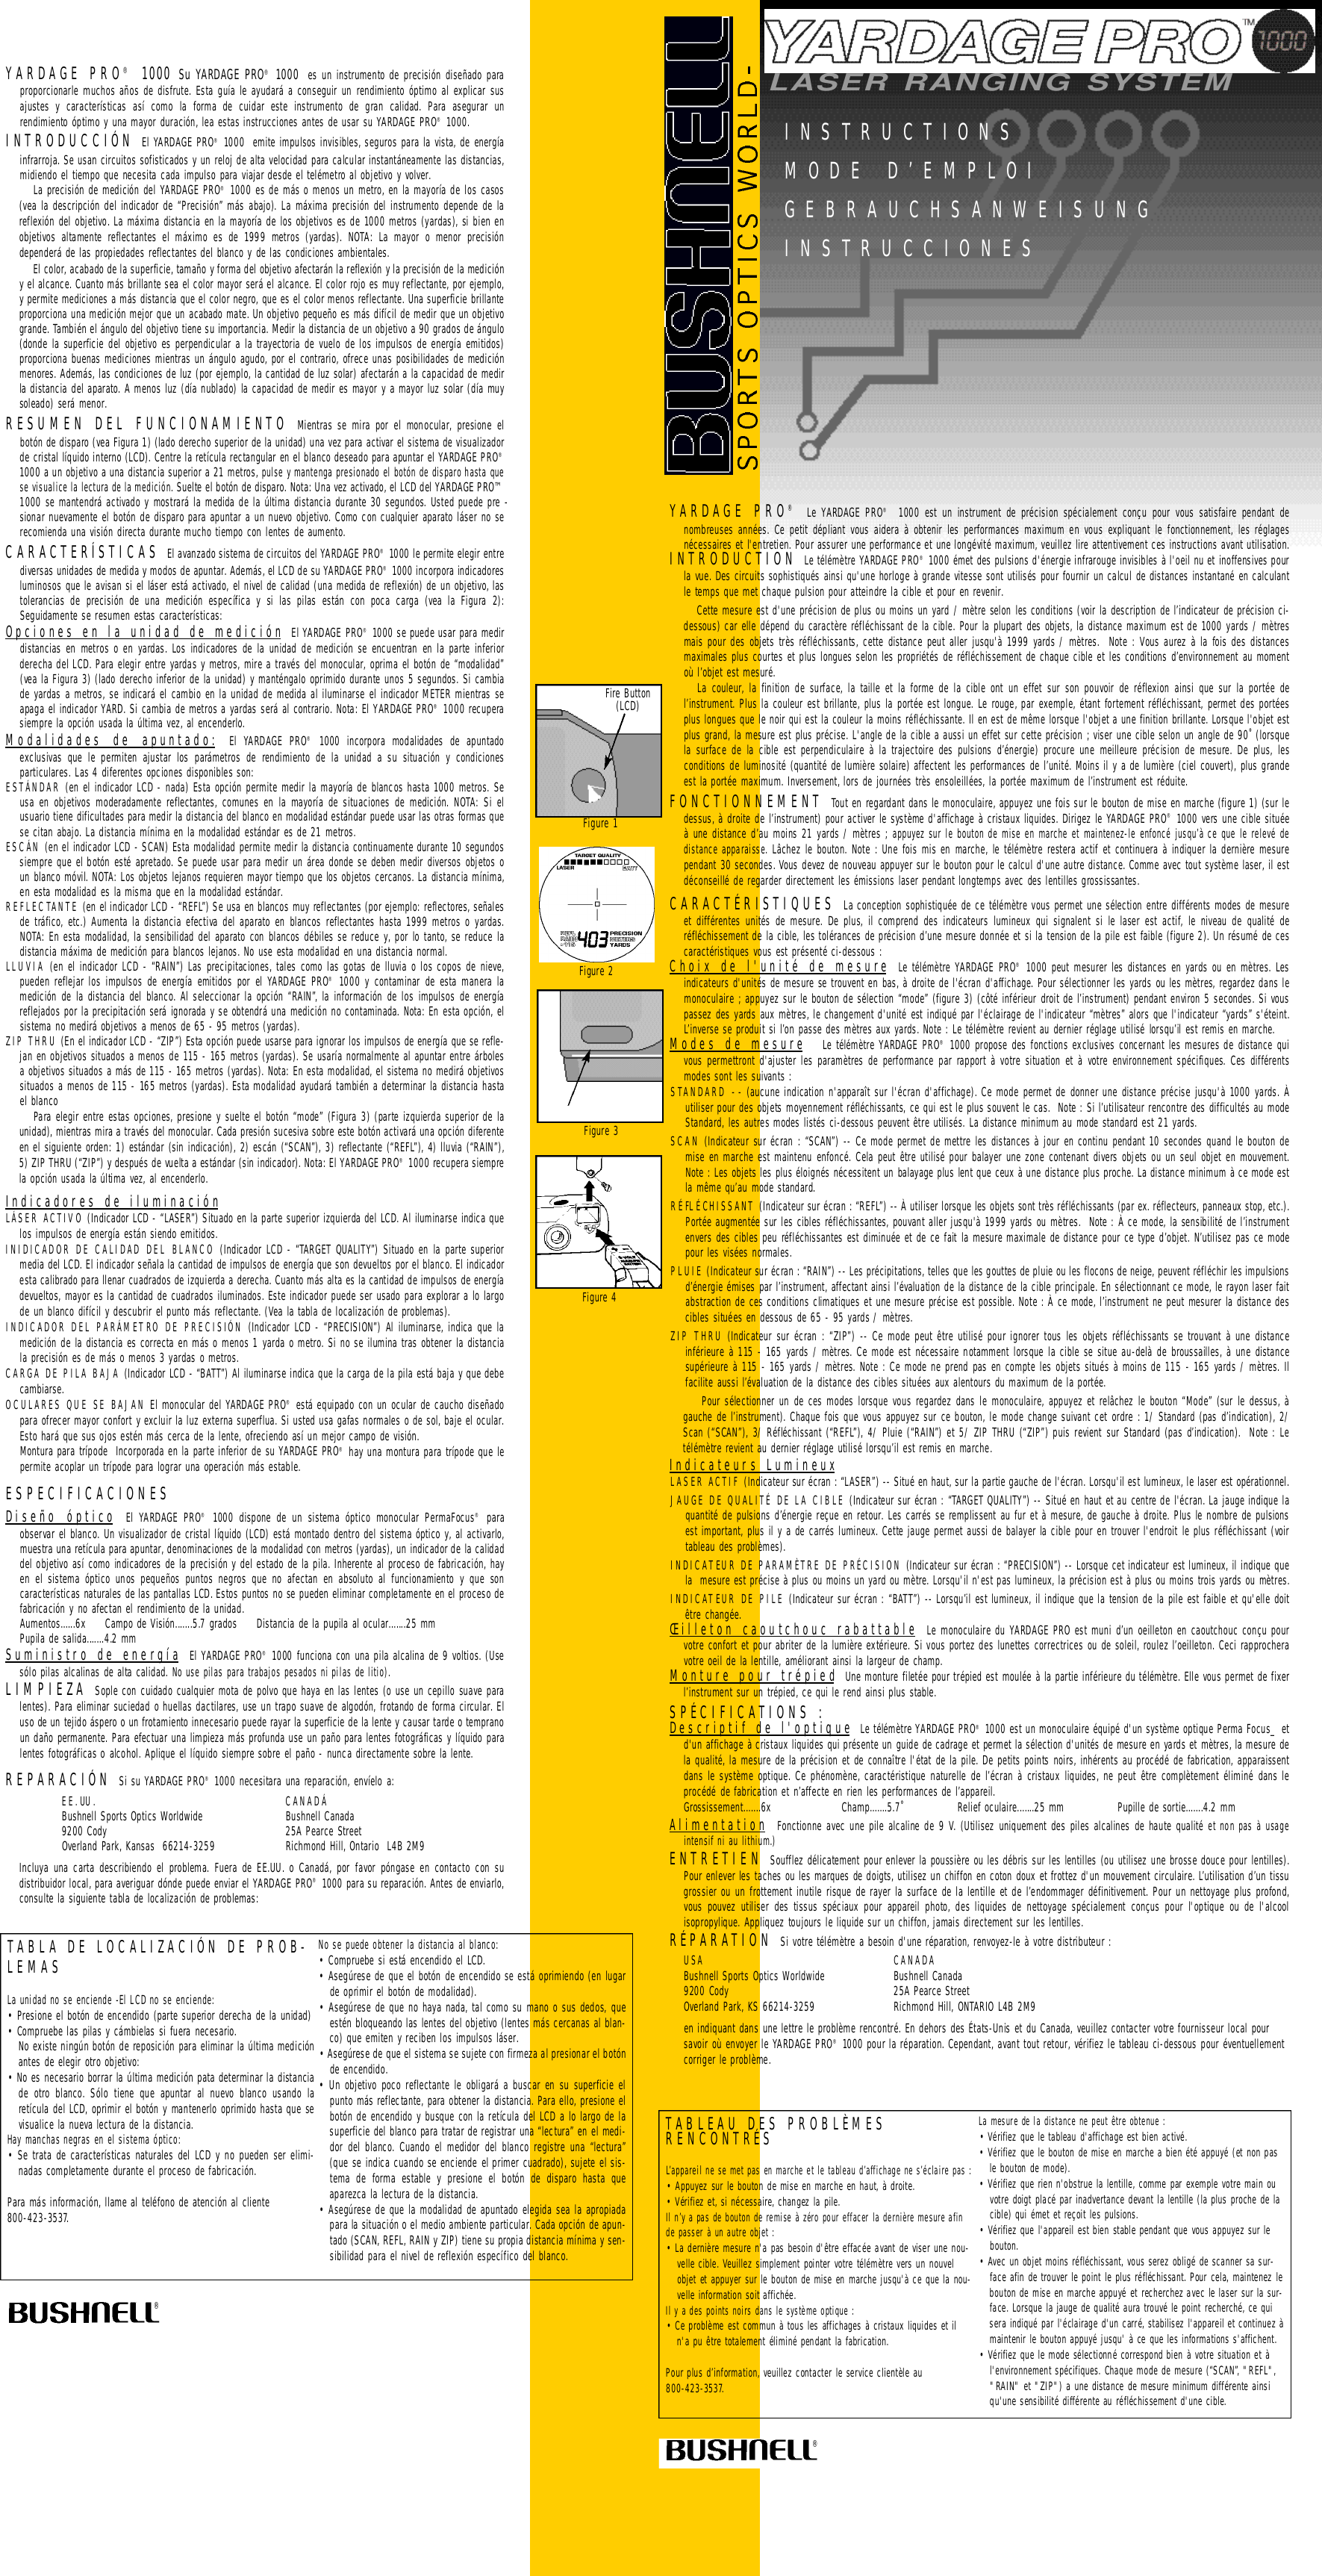 Page 2 of 2 - Bushnell Bushnell-Yardage-Pro-1000-201000-Owner-S-Manual